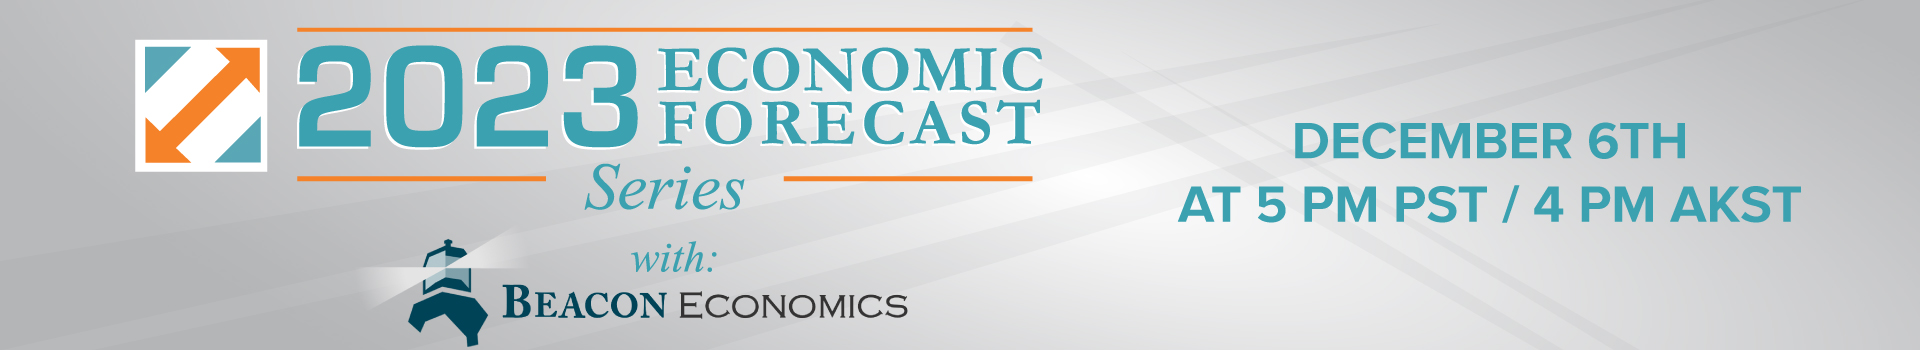 December 6th 2023 Economic Forecast Series